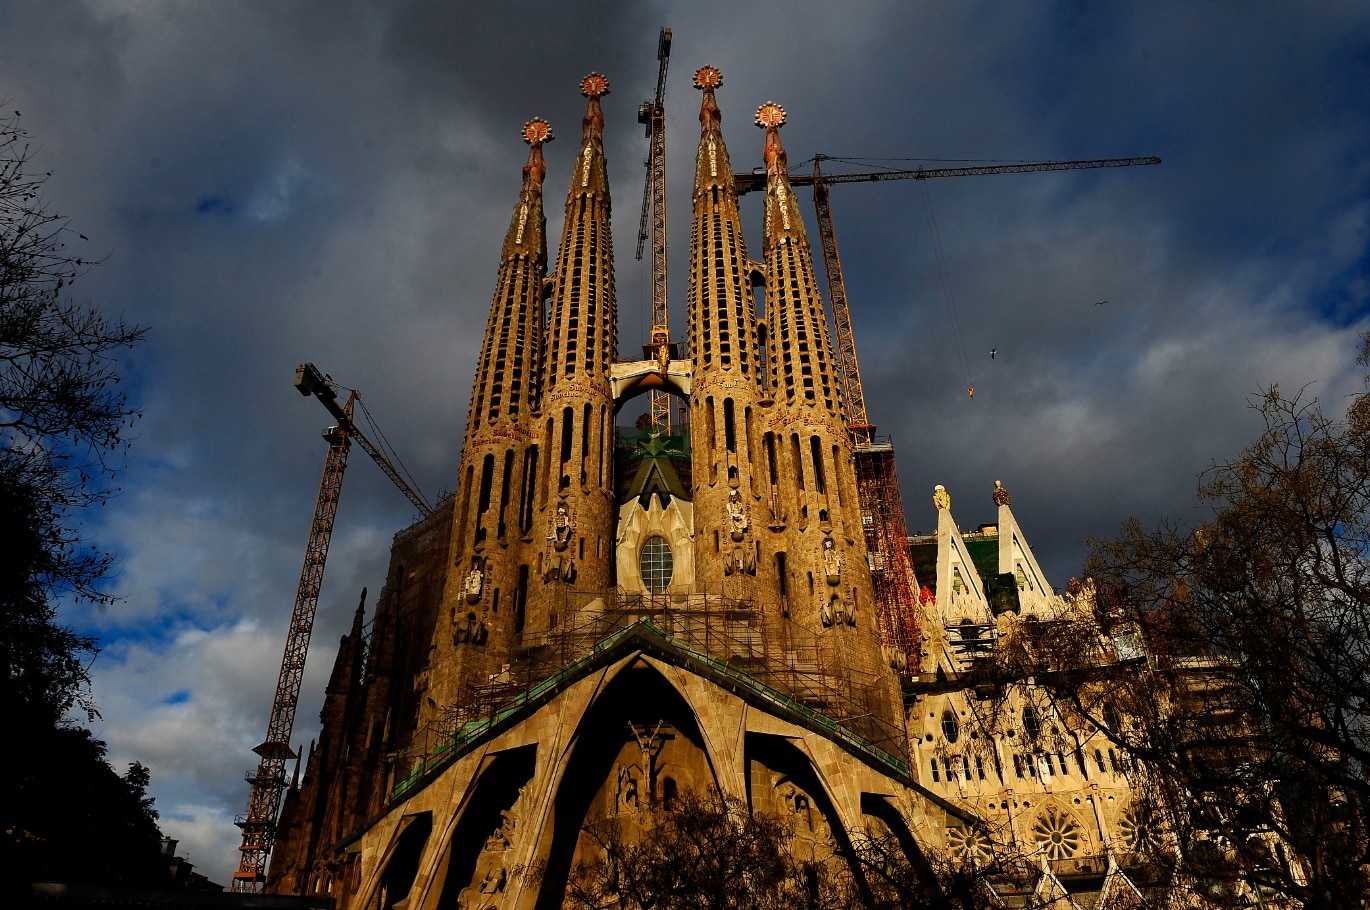 File image of Antoni Gaudi's Sagrada Familia church in Barcelona.